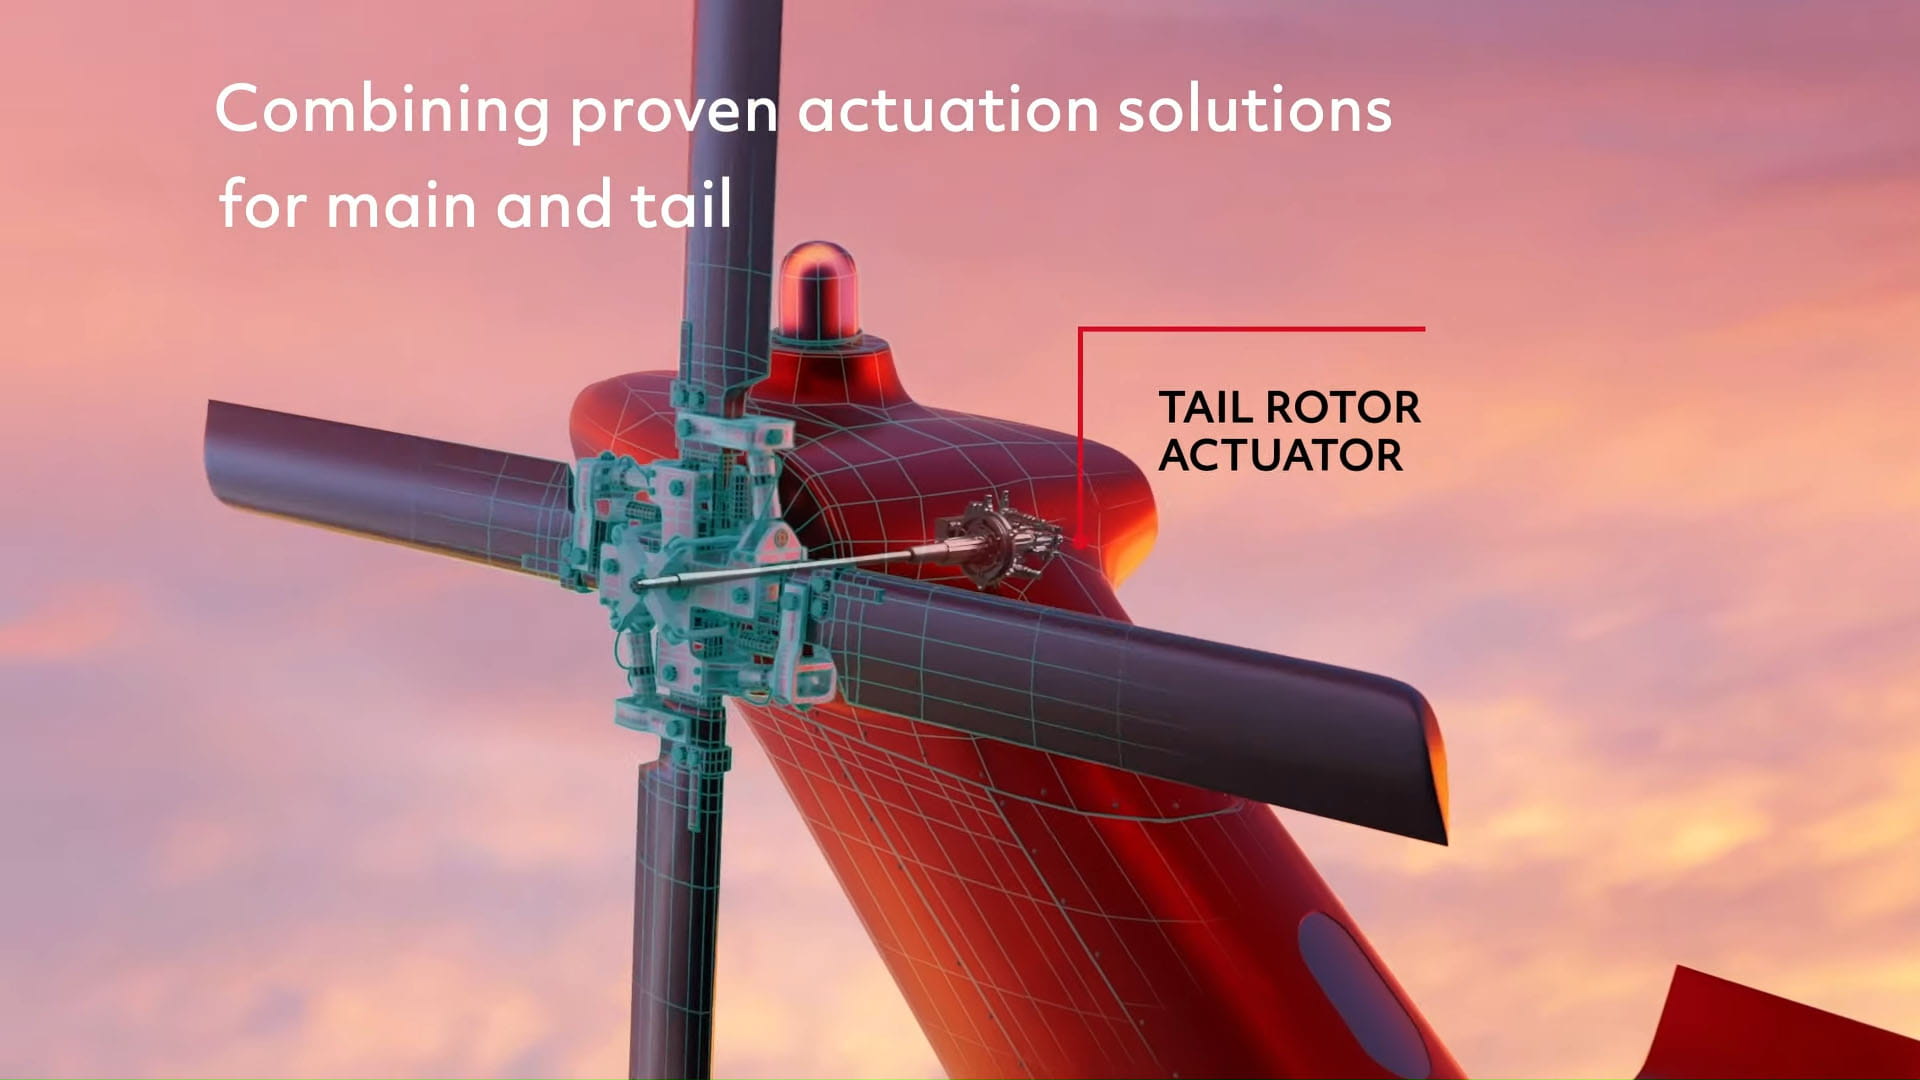 Tail rotor actuator